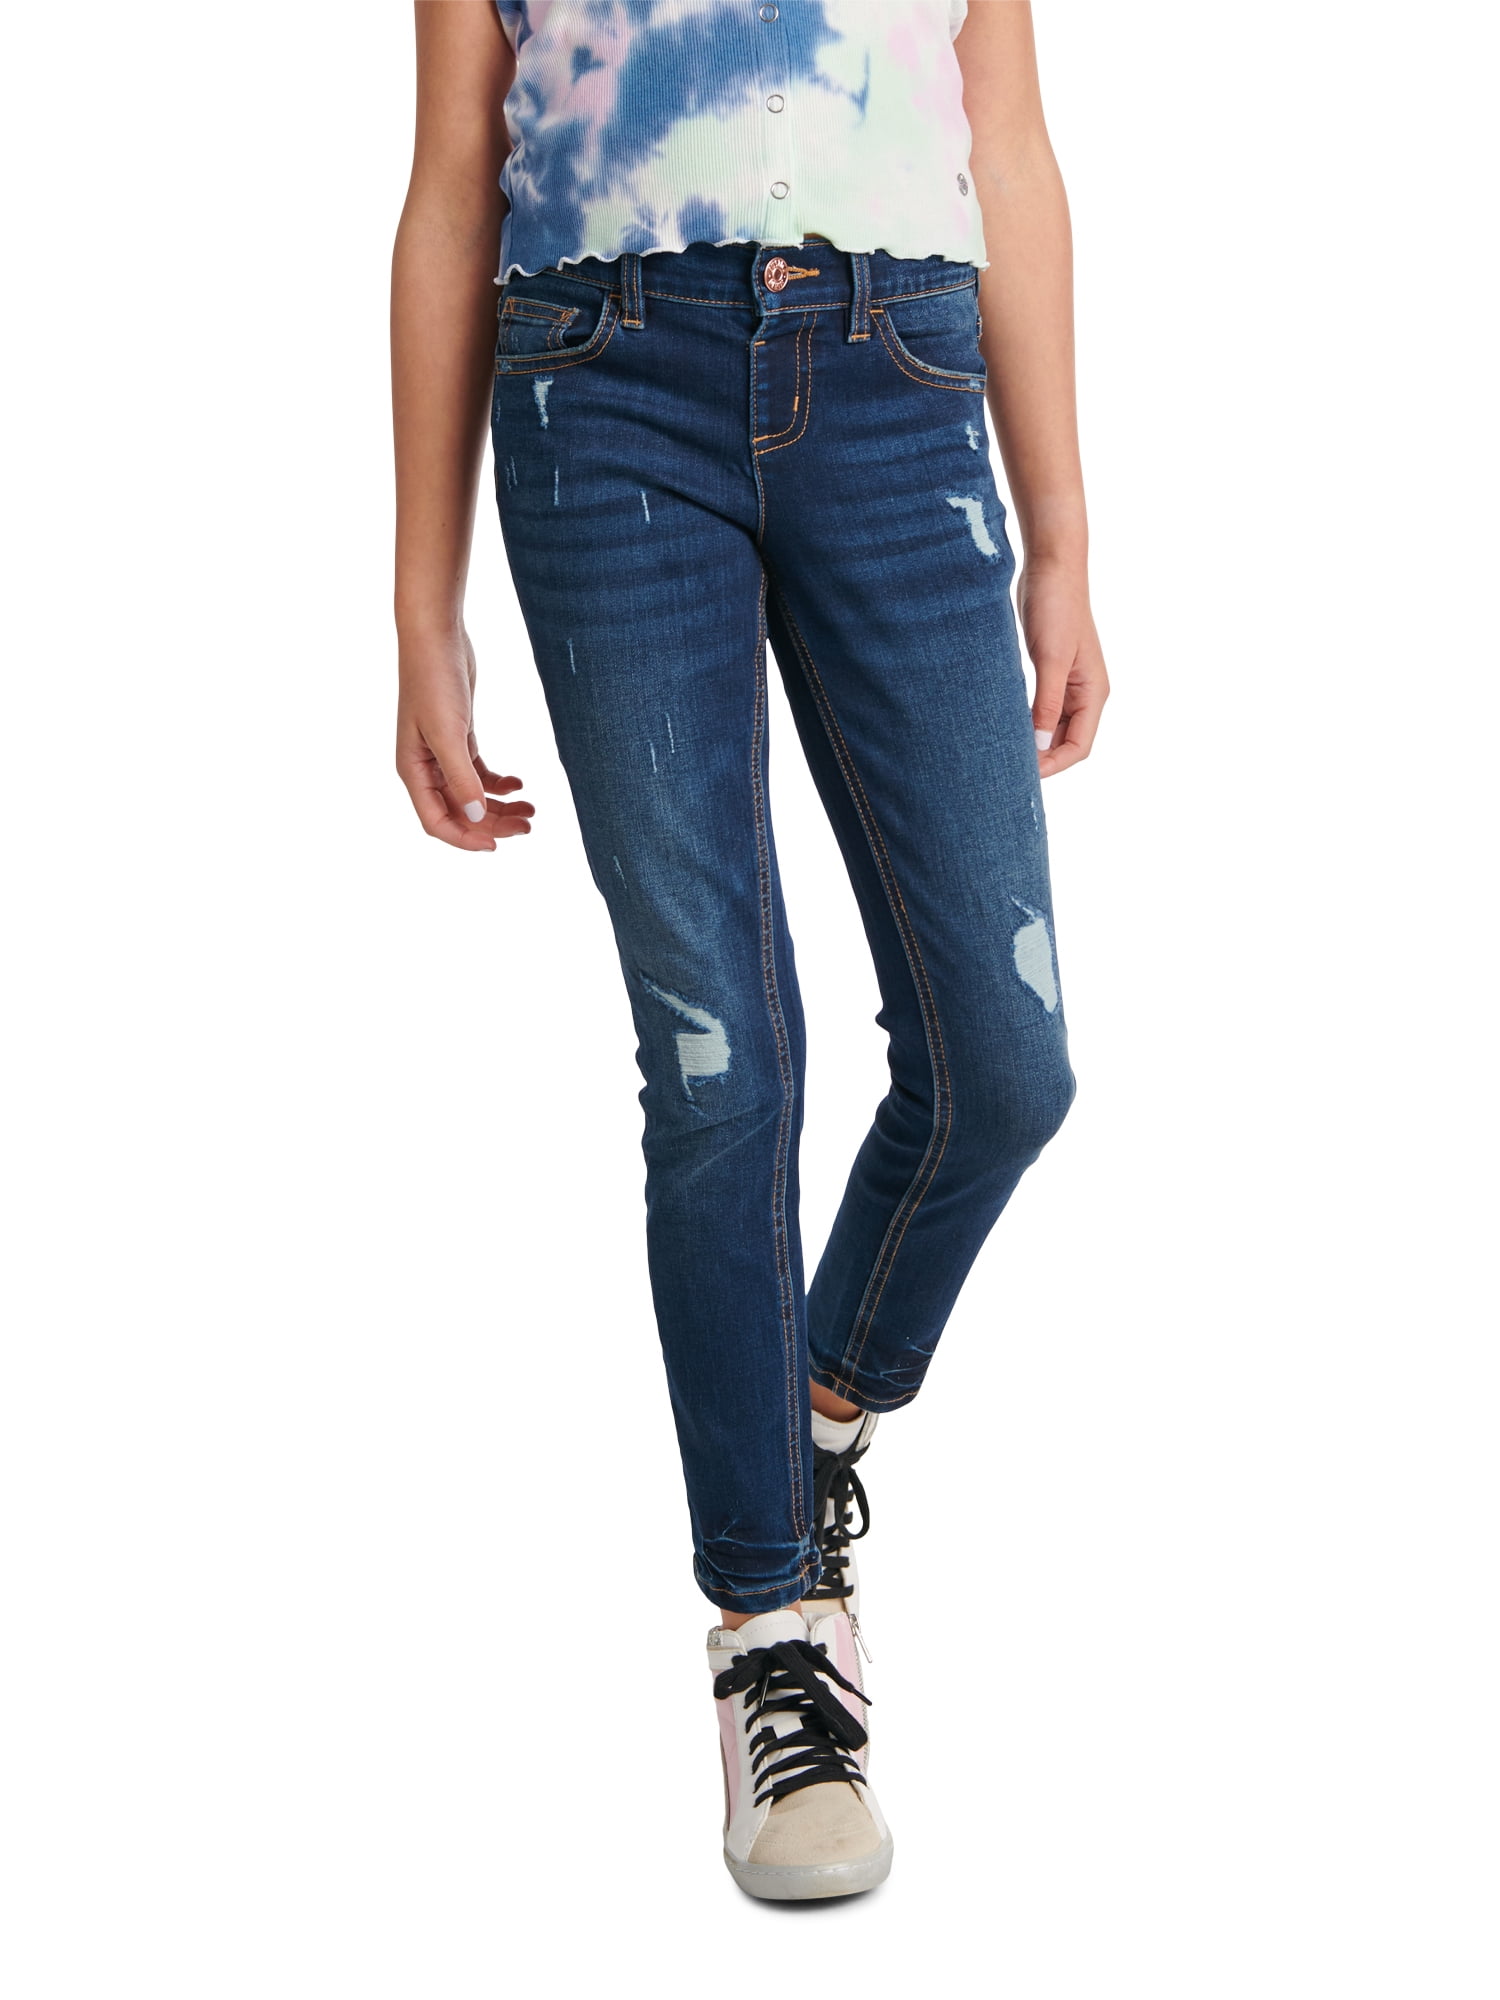 New Women's Skinny Fit Mid Waist Blue Jeans Stretch Denim Lggings Size 6-14 